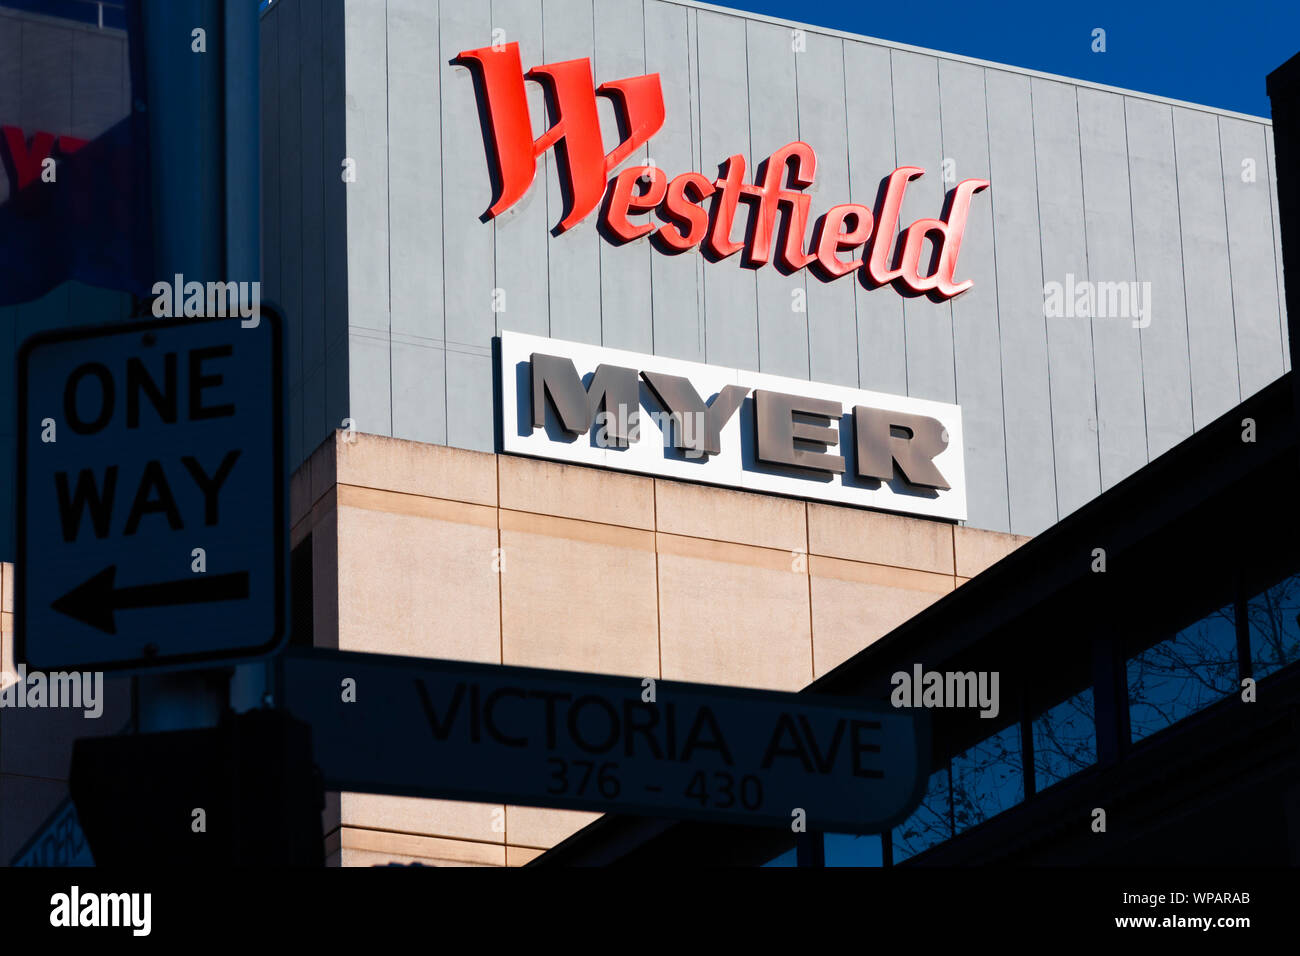 Westfield and Myer logo at Chatswood Sydney Australia Stock Photo